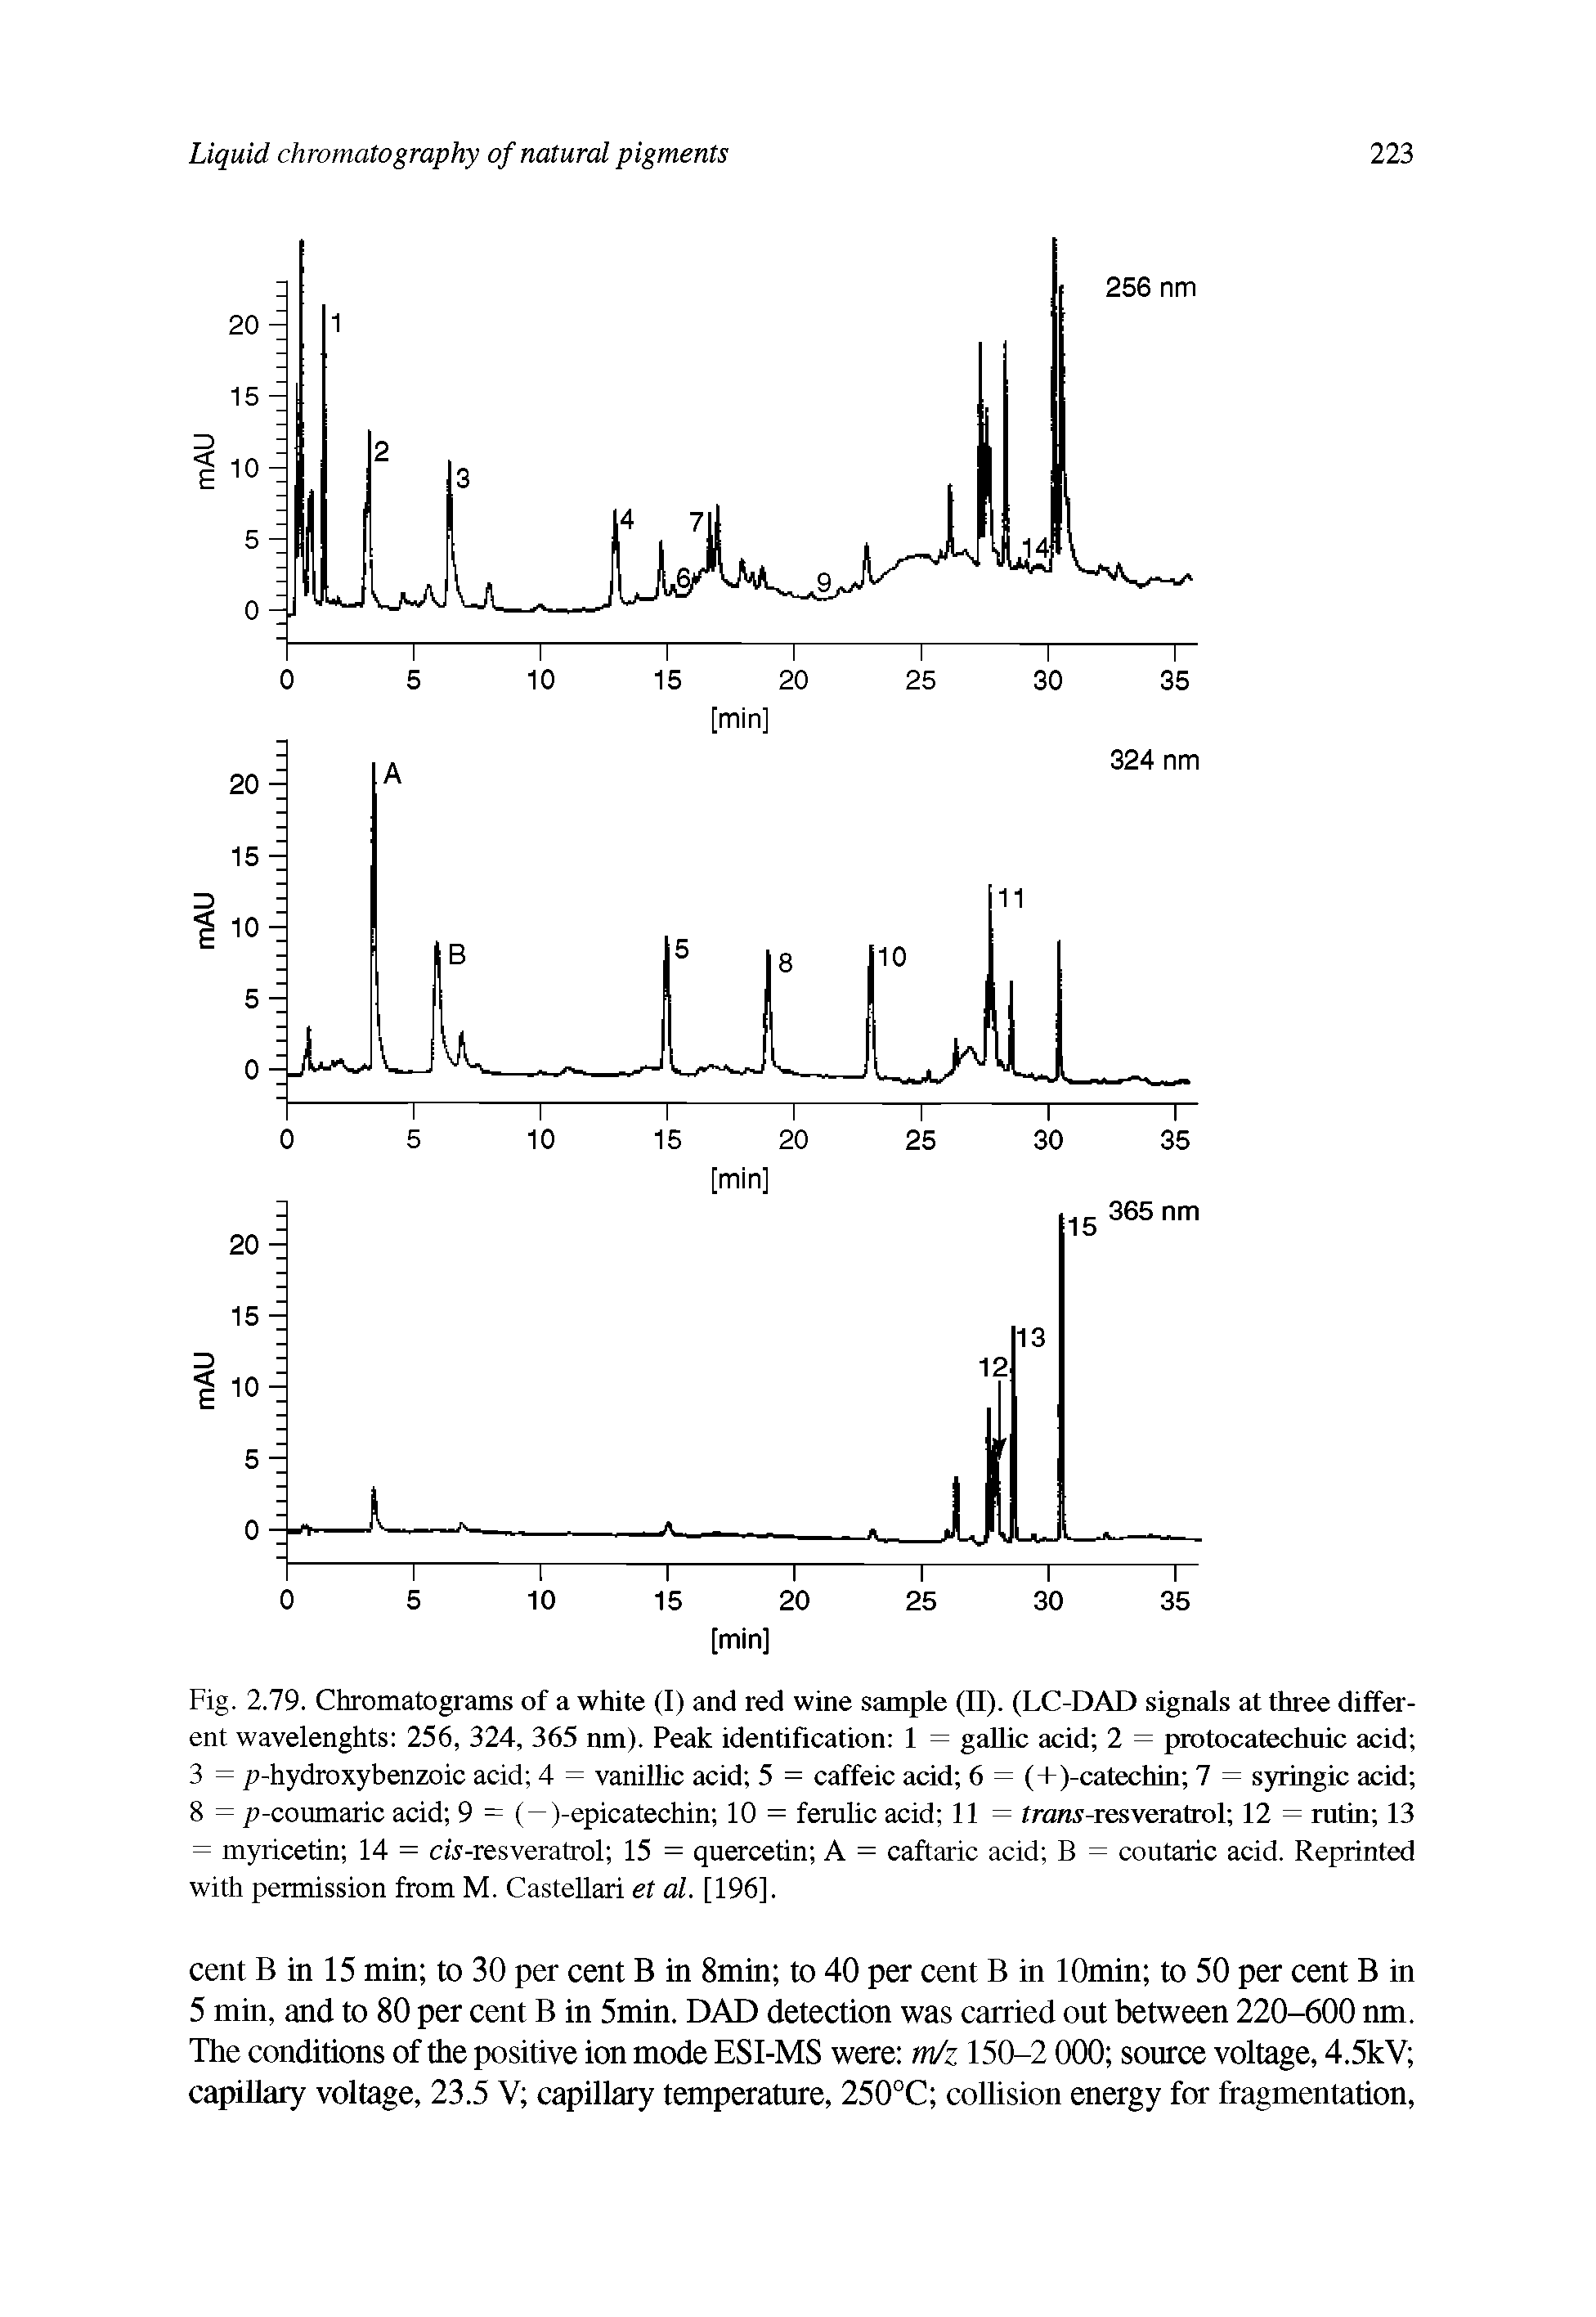 Fig. 2.79. Chromatograms of a white (I) and red wine sample (II). (LC-DAD signals at three different wavelenghts 256, 324, 365 nm). Peak identification 1 = gallic acid 2 = protocatechuic acid 3 = p-hydroxybenzoic acid 4 = vanillic acid 5 = caffeic acid 6 = (+)-catechin 7 = syringic acid 8 = p-coumaric acid 9 = ( — )-epicatechin 10 = ferulic acid 11 = fraras-resveratrol 12 = rutin 13 = myricetin 14 = cw-resveratrol 15 = quercetin A = caftaric acid B = coutaric acid. Reprinted with permission from M. Castellari et al. [196],...